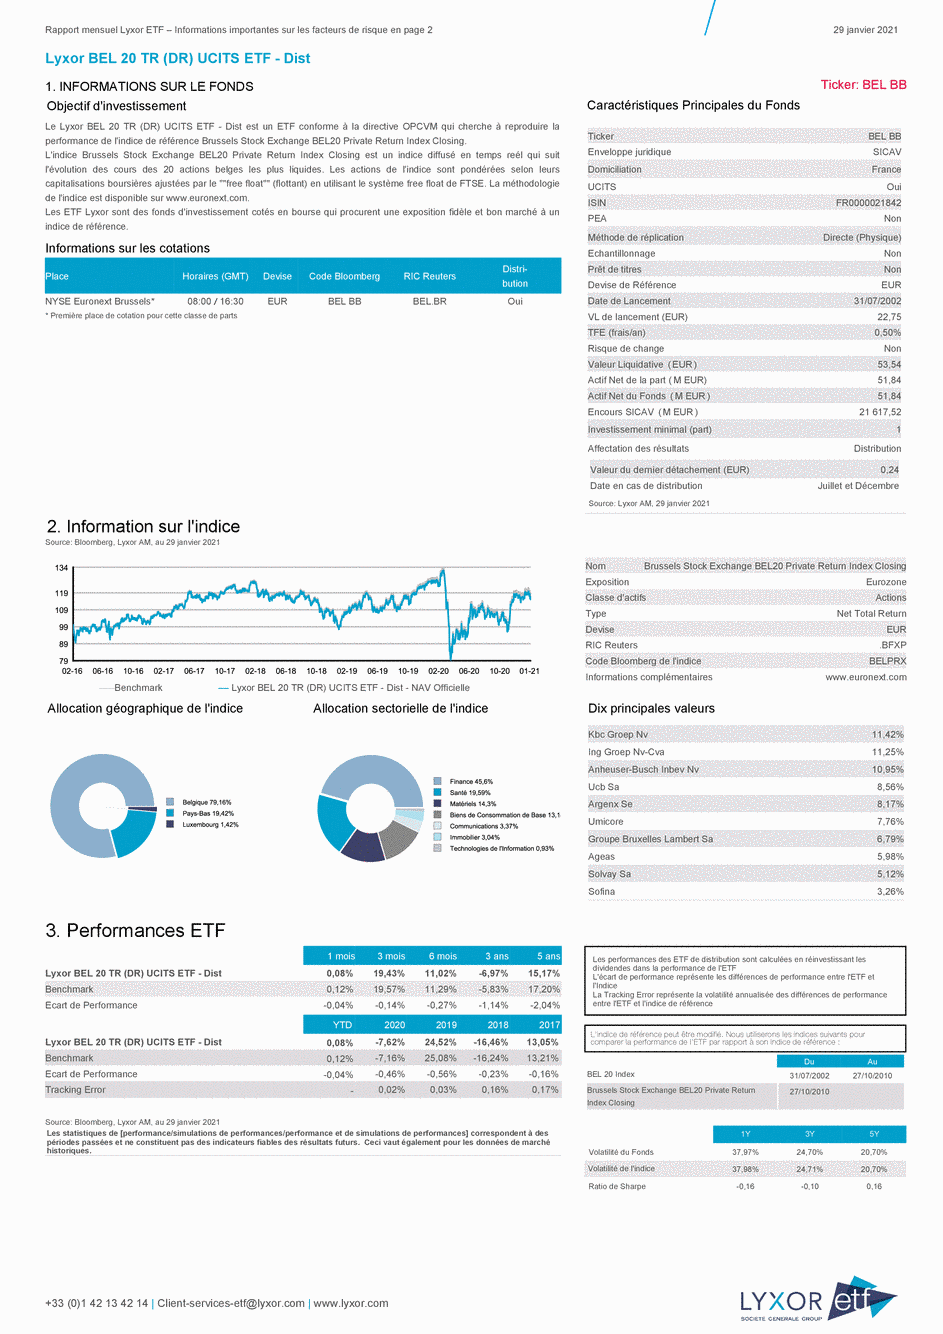 Reporting Lyxor BEL 20 TR (DR) UCITS ETF - Dist - 29/01/2021 - Français